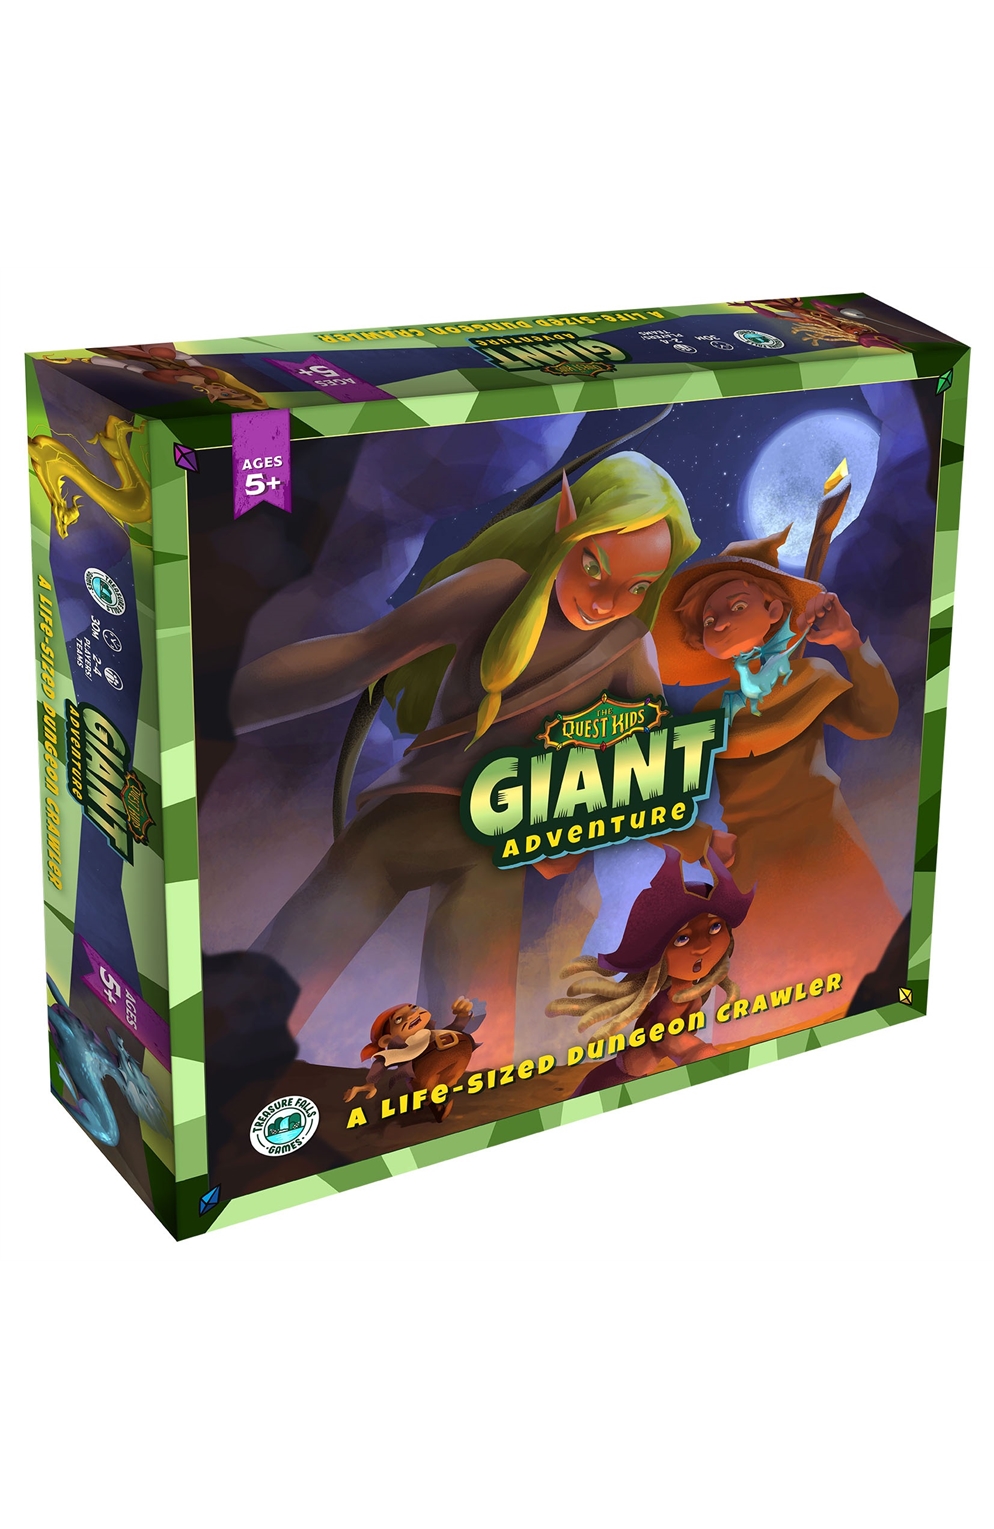 Quest Kids: Giant Adventure